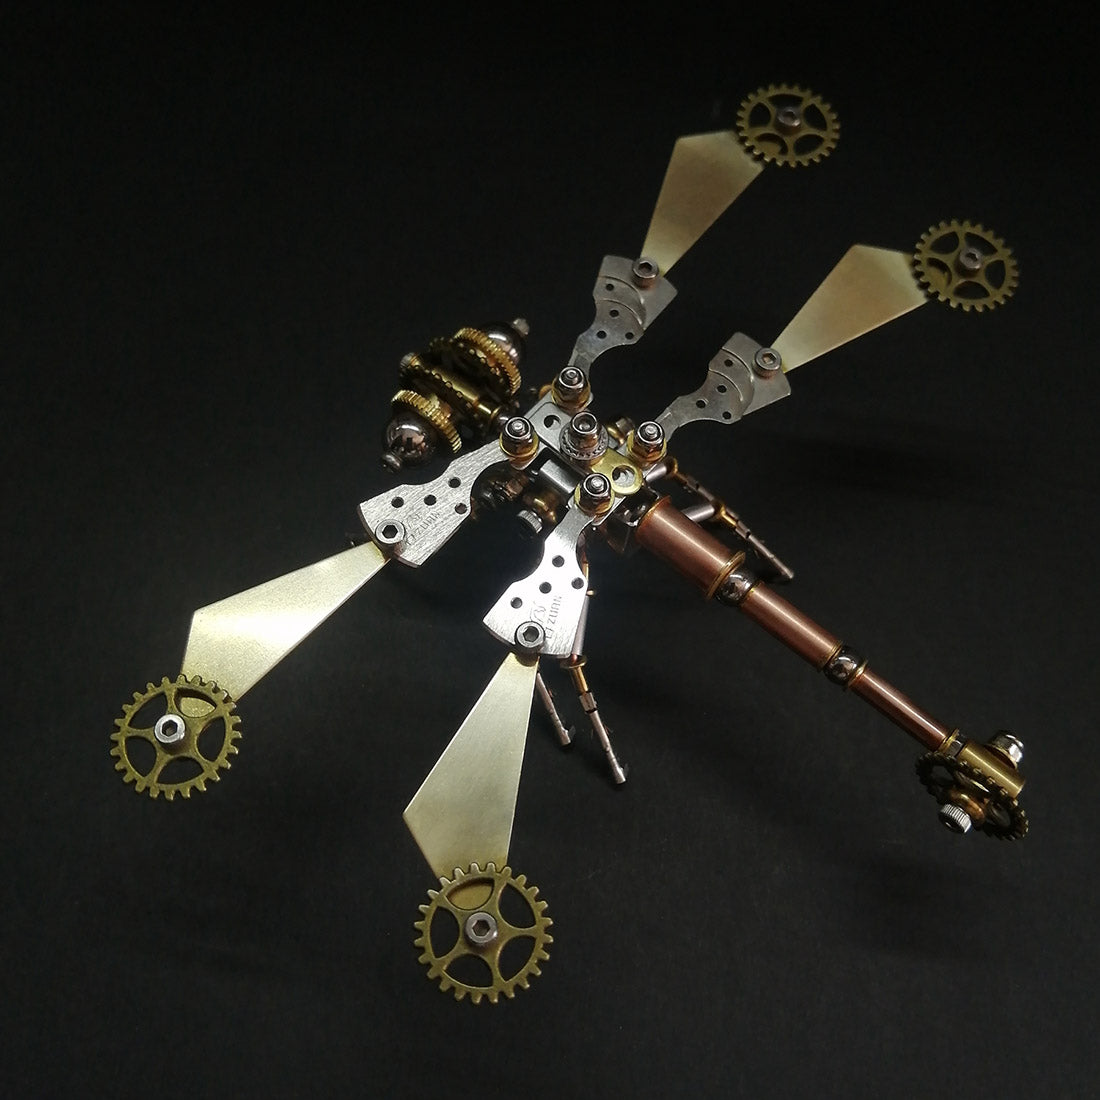 3D Metal Steampunk Puzzle Dragonfly DIY Assembled Model 150+PCS